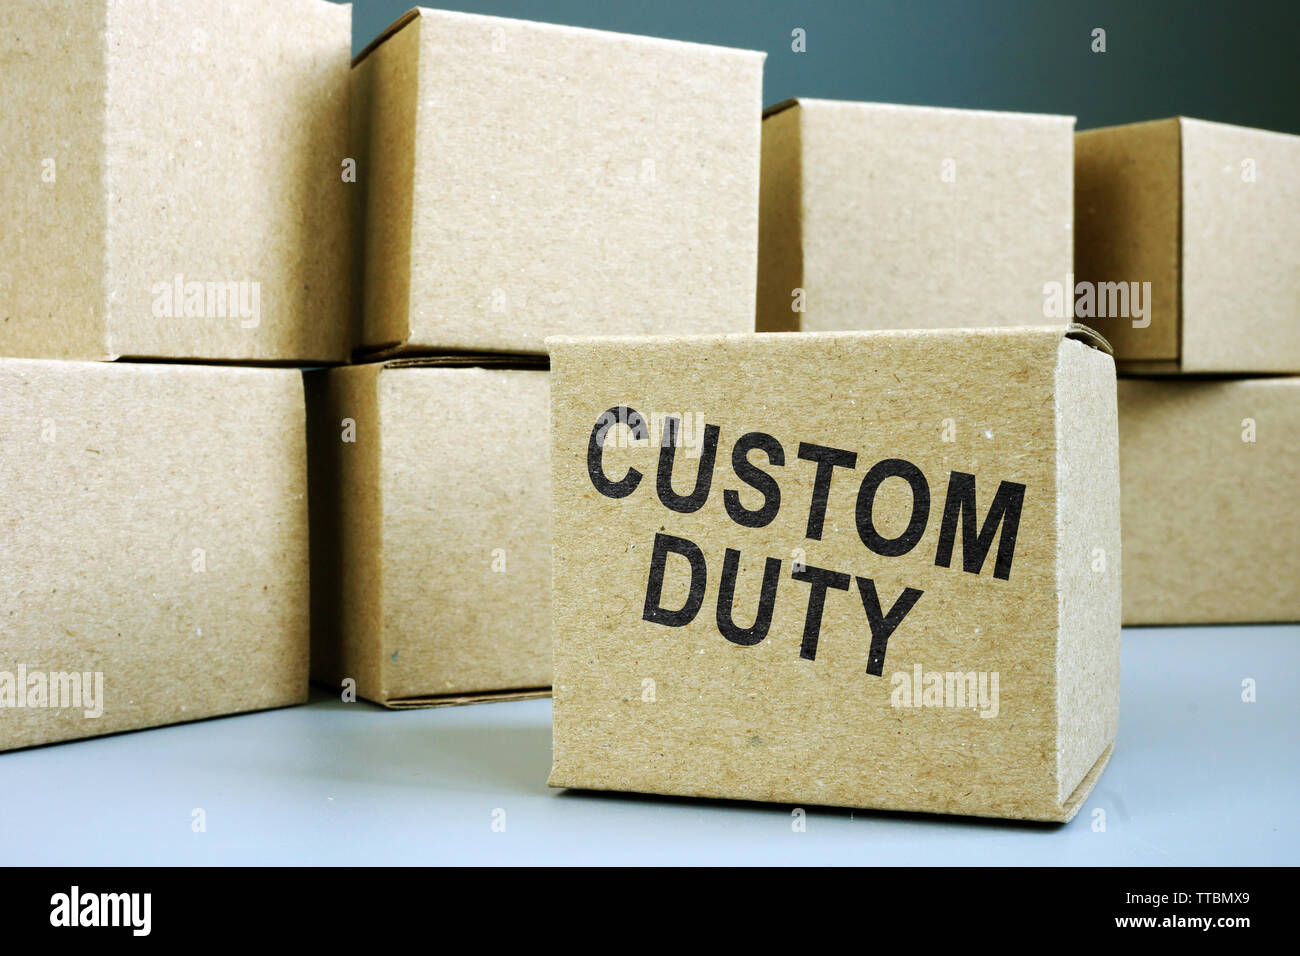 Stamp Custom duty on the box. Stock Photo